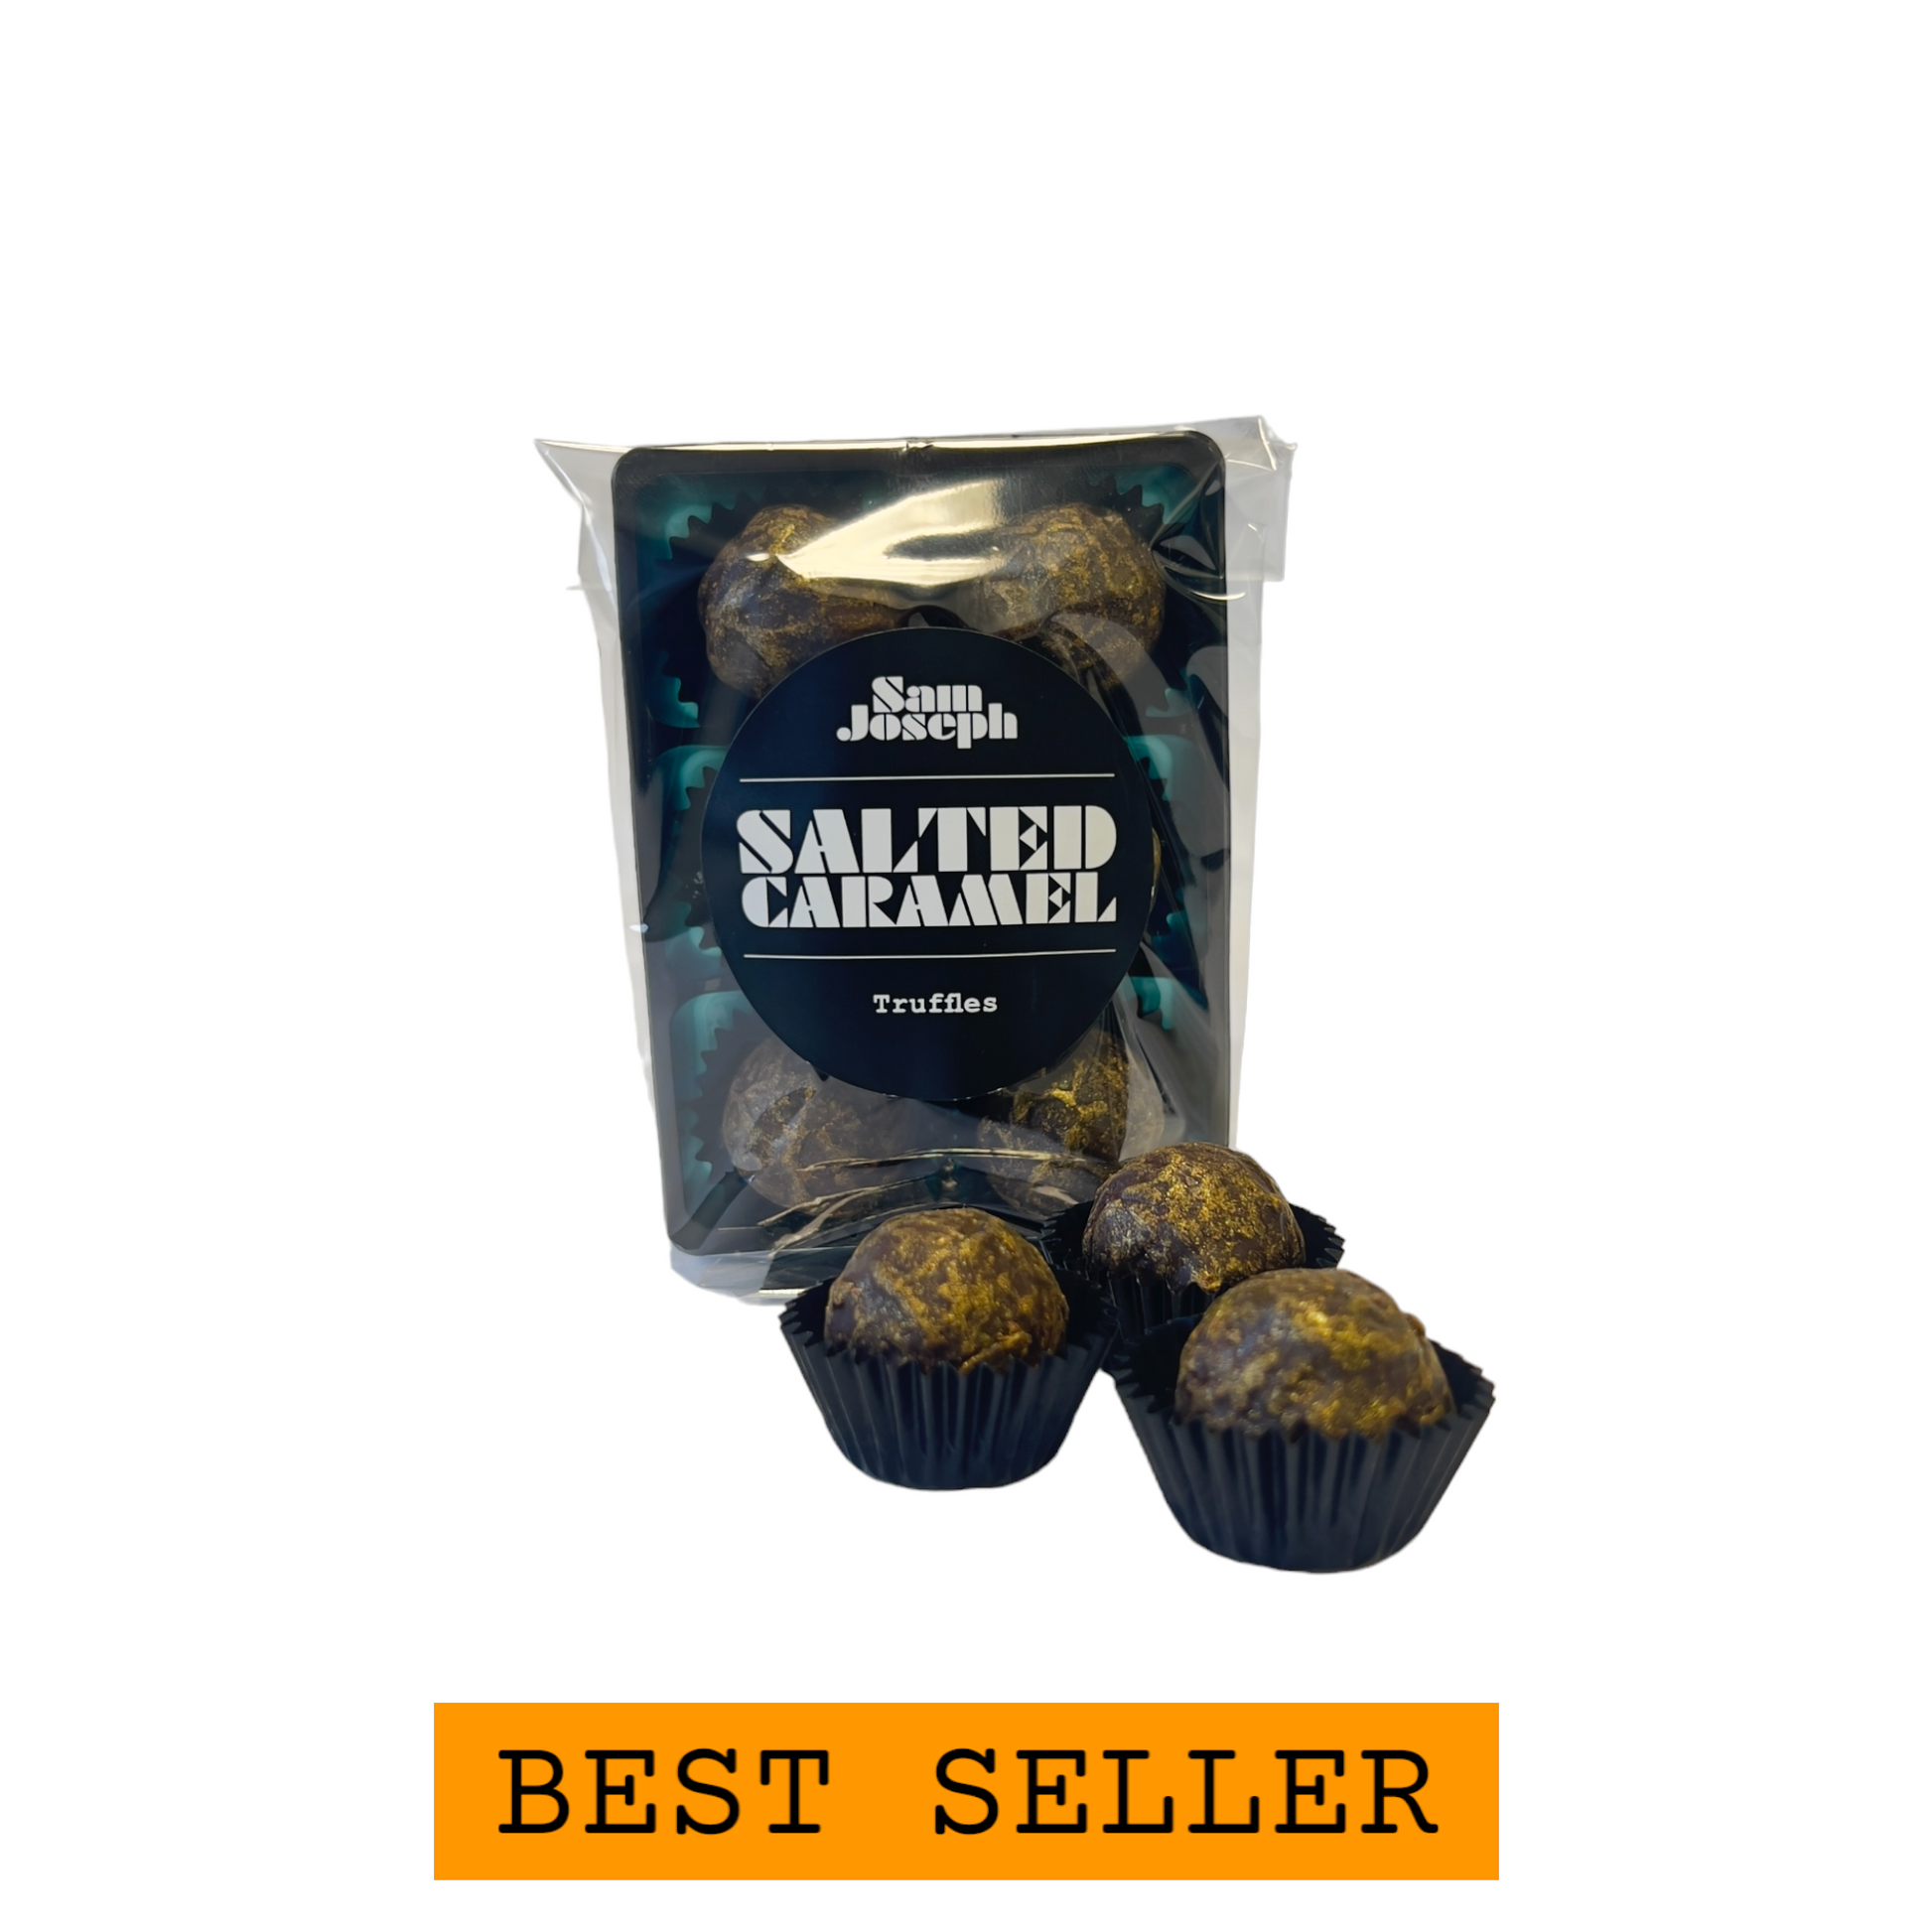 Salted caramel truffles - Sam Joseph chocolates